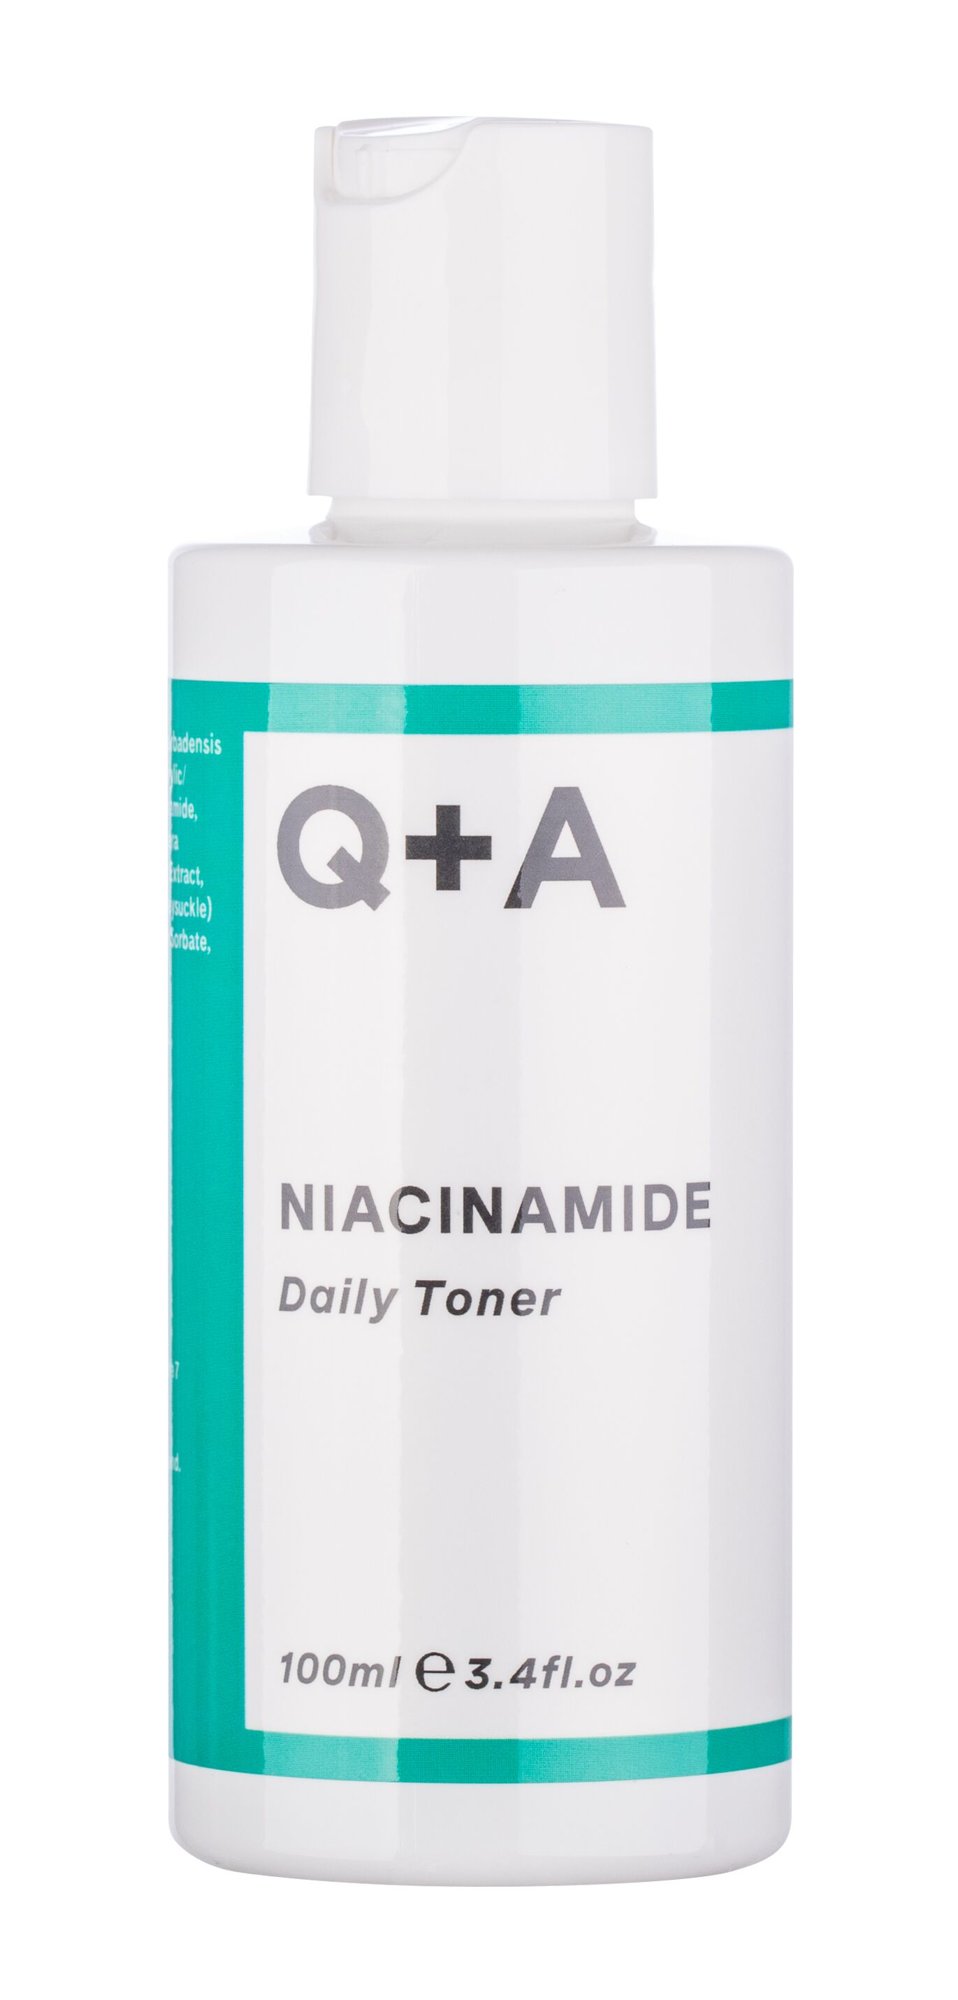 Q+A Niacinamide Daily Toner valomasis vanduo veidui